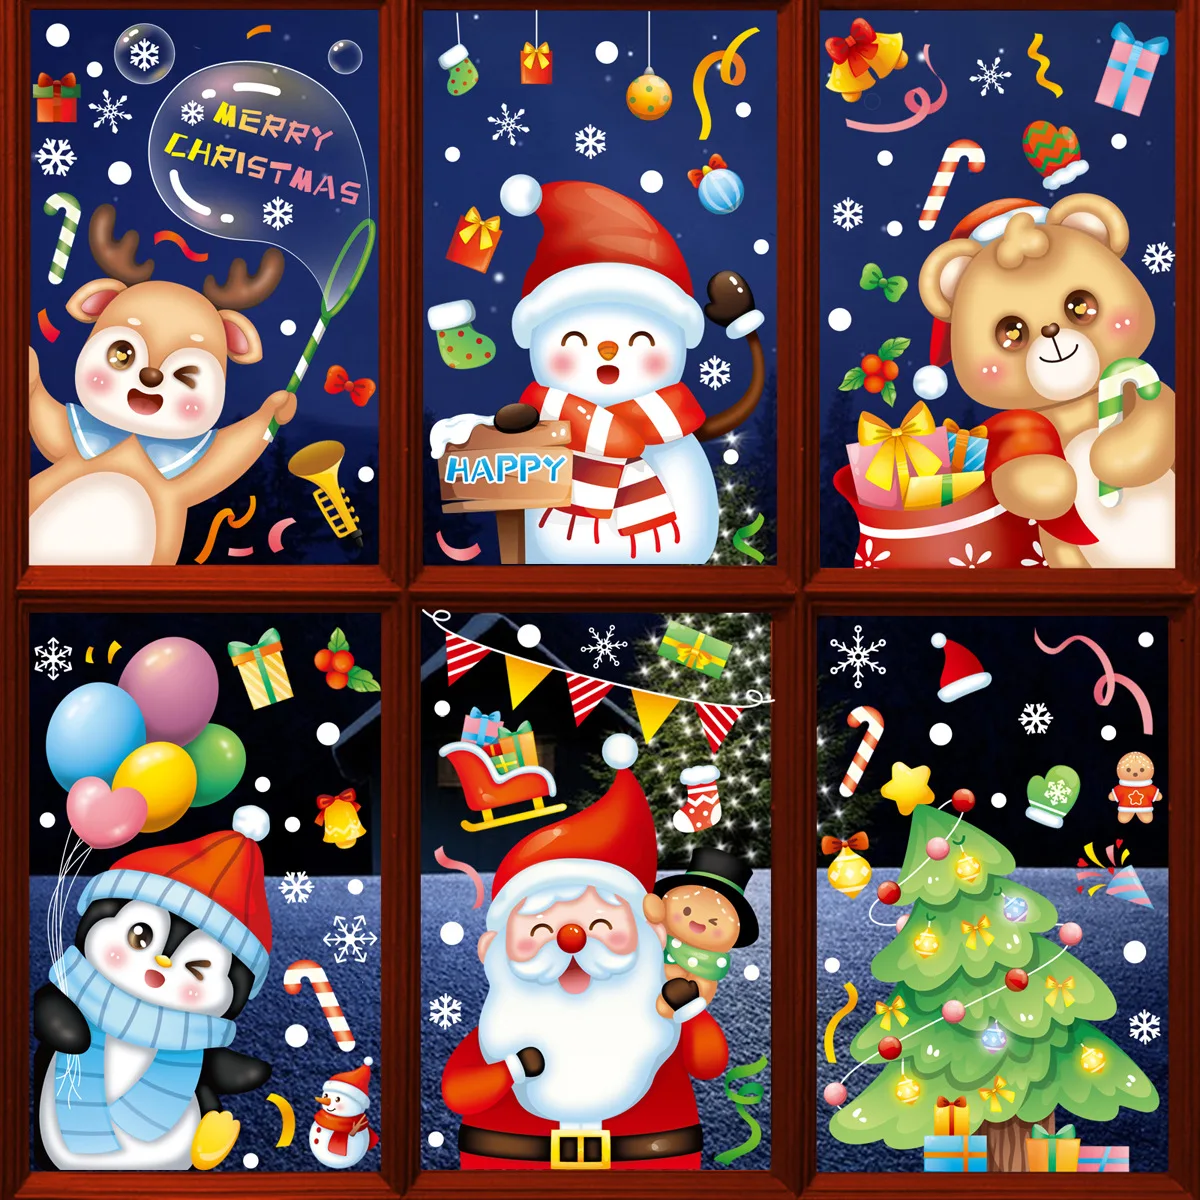 

Christmas Snowflake Stickers Xmas Tree Santa Claus Snowman Elk Window Stickers Merry Christmas Static Electricity Wall Stickers